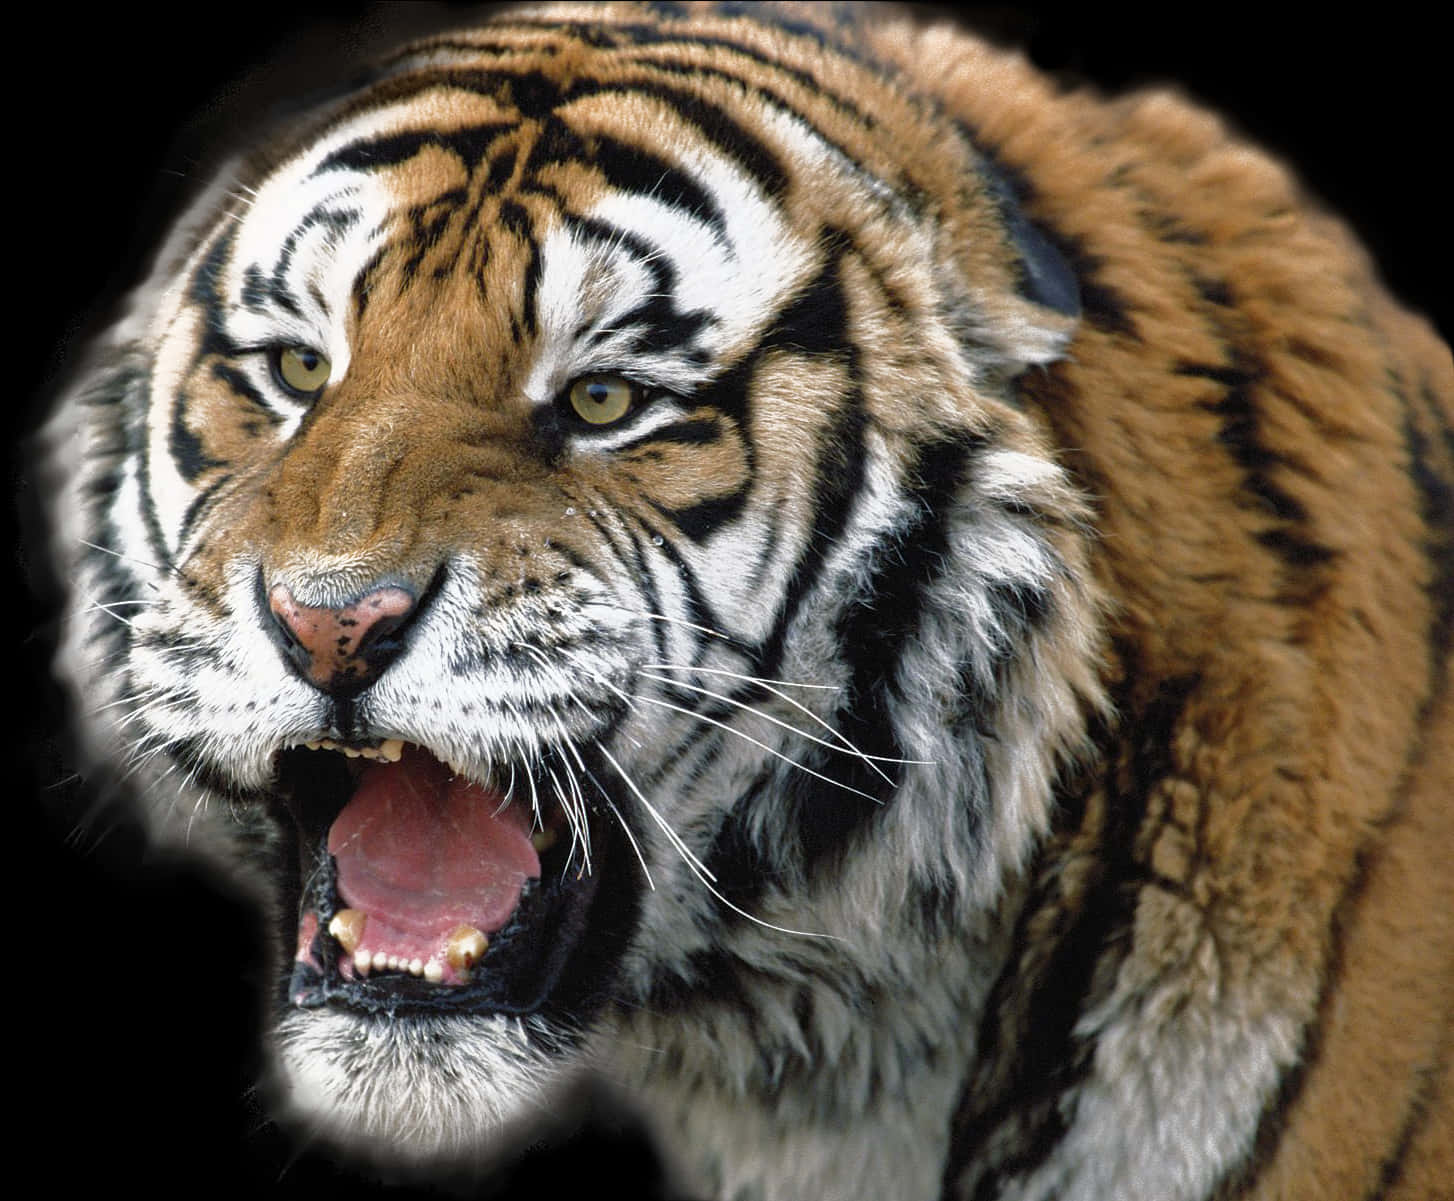 Roaring Tiger With Short Carnassial Teeth